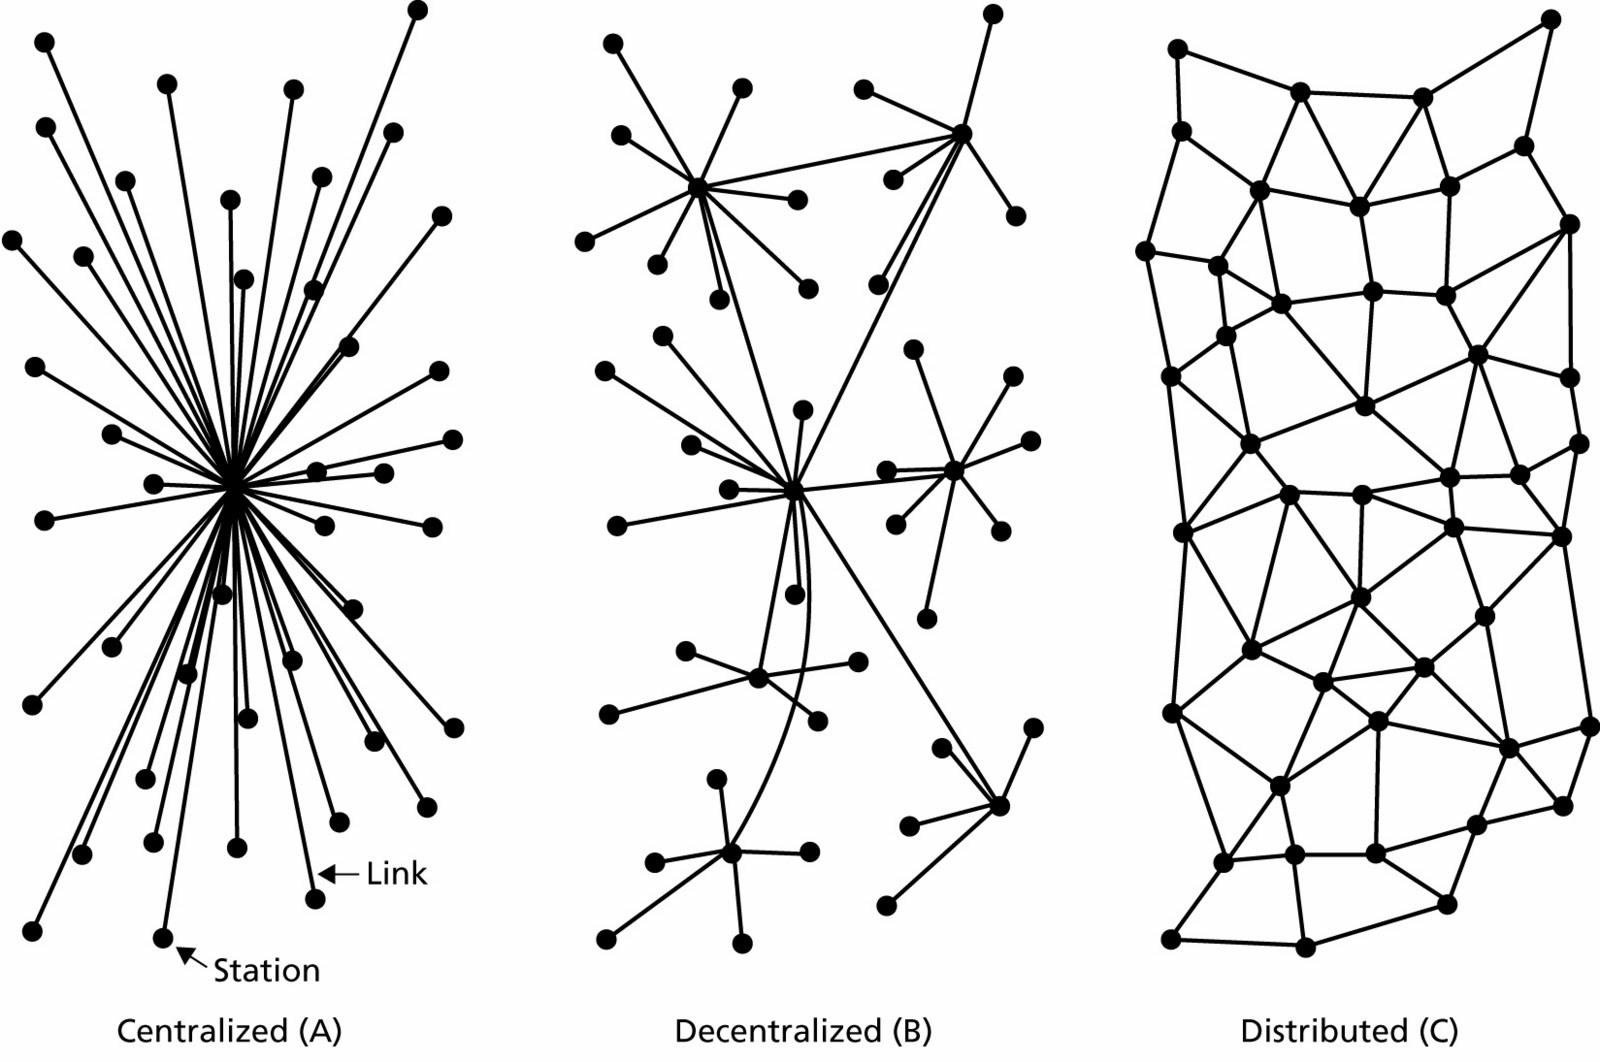 Schematic representation of network topologies